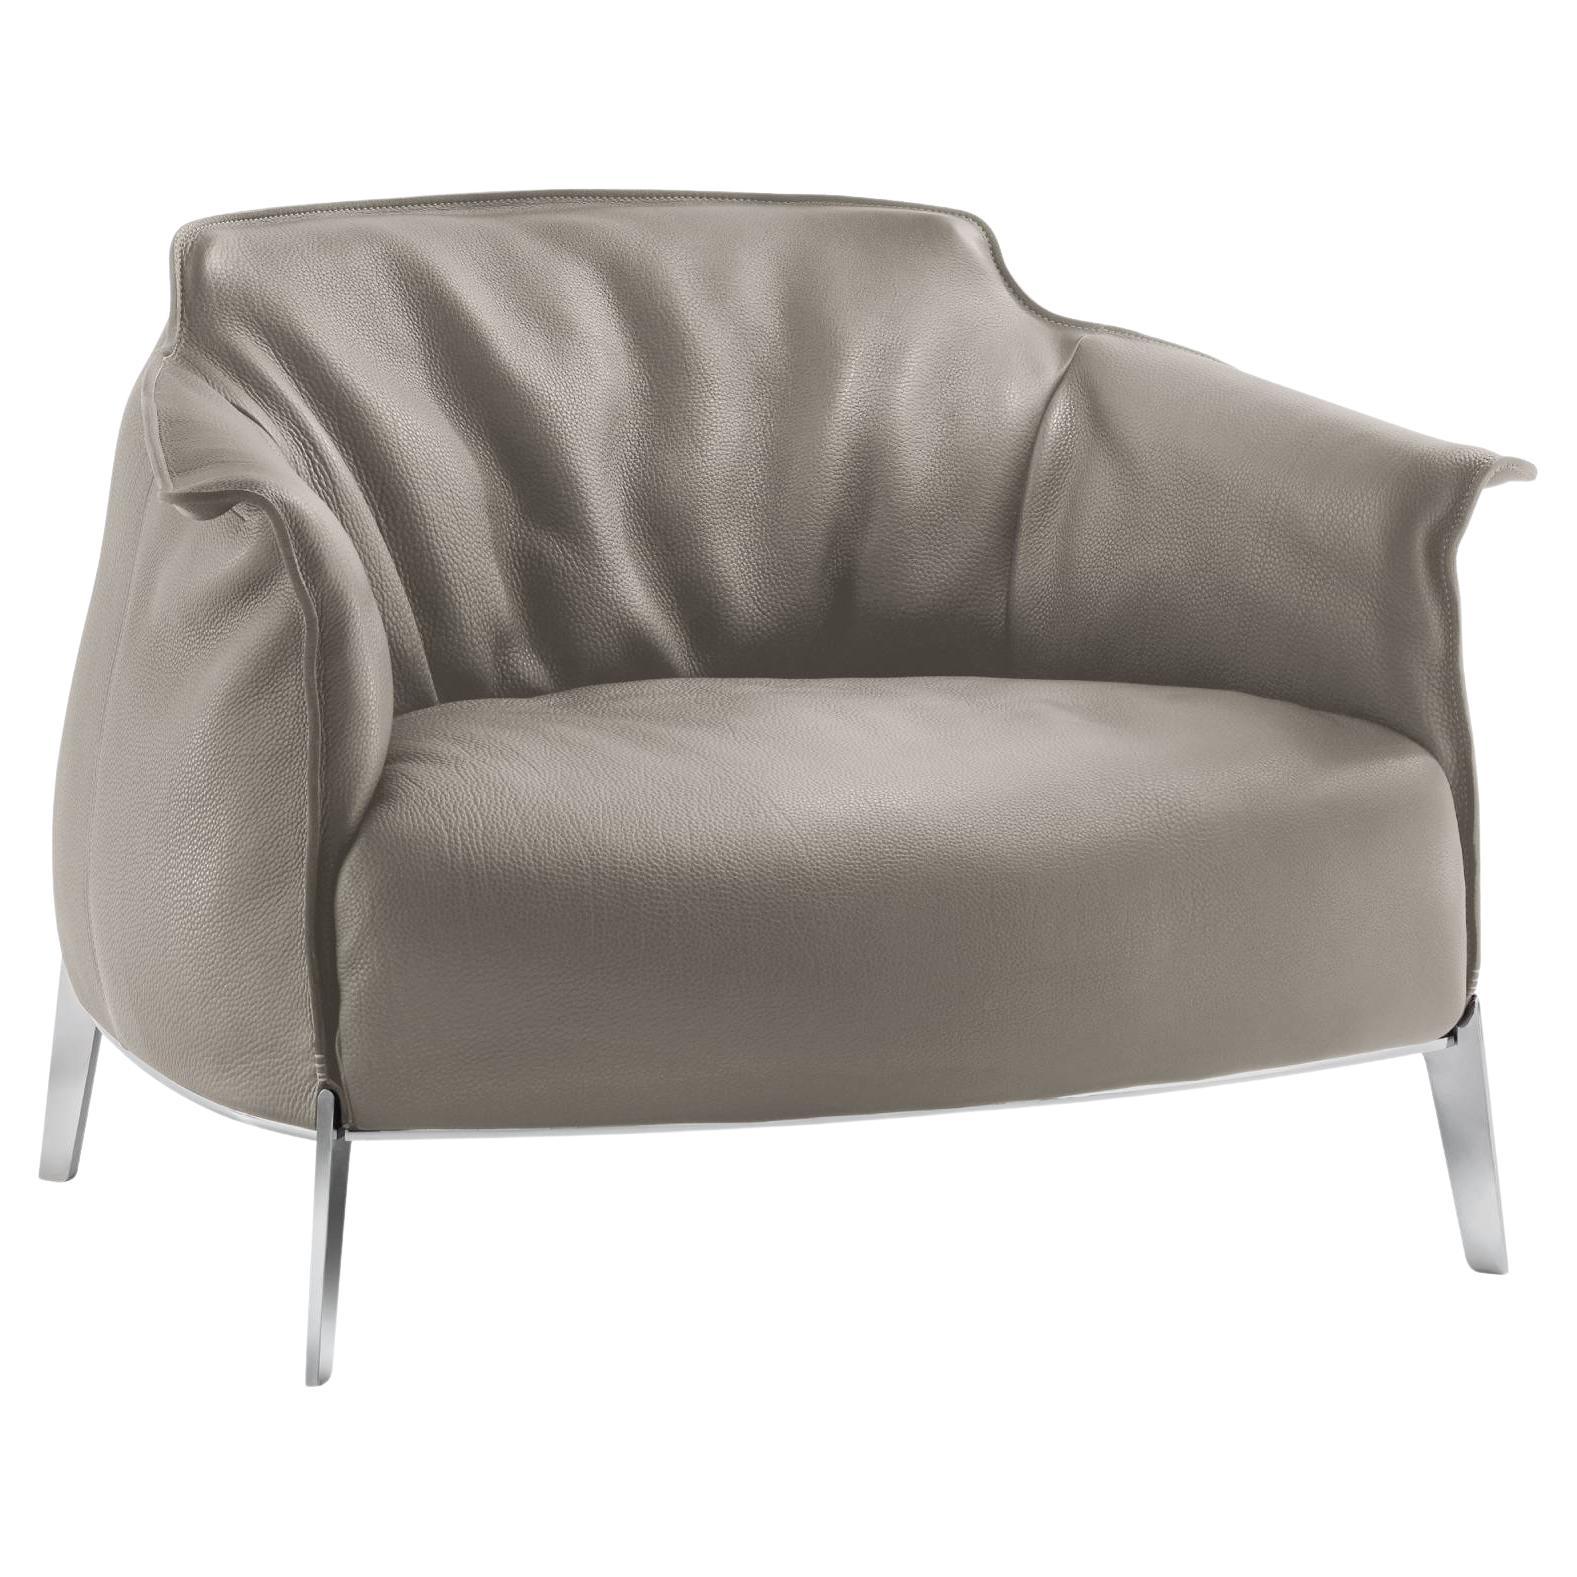 Archibald Gran Comfort fauteuil en cuir véritable Pelle Safari Elefante gris en vente